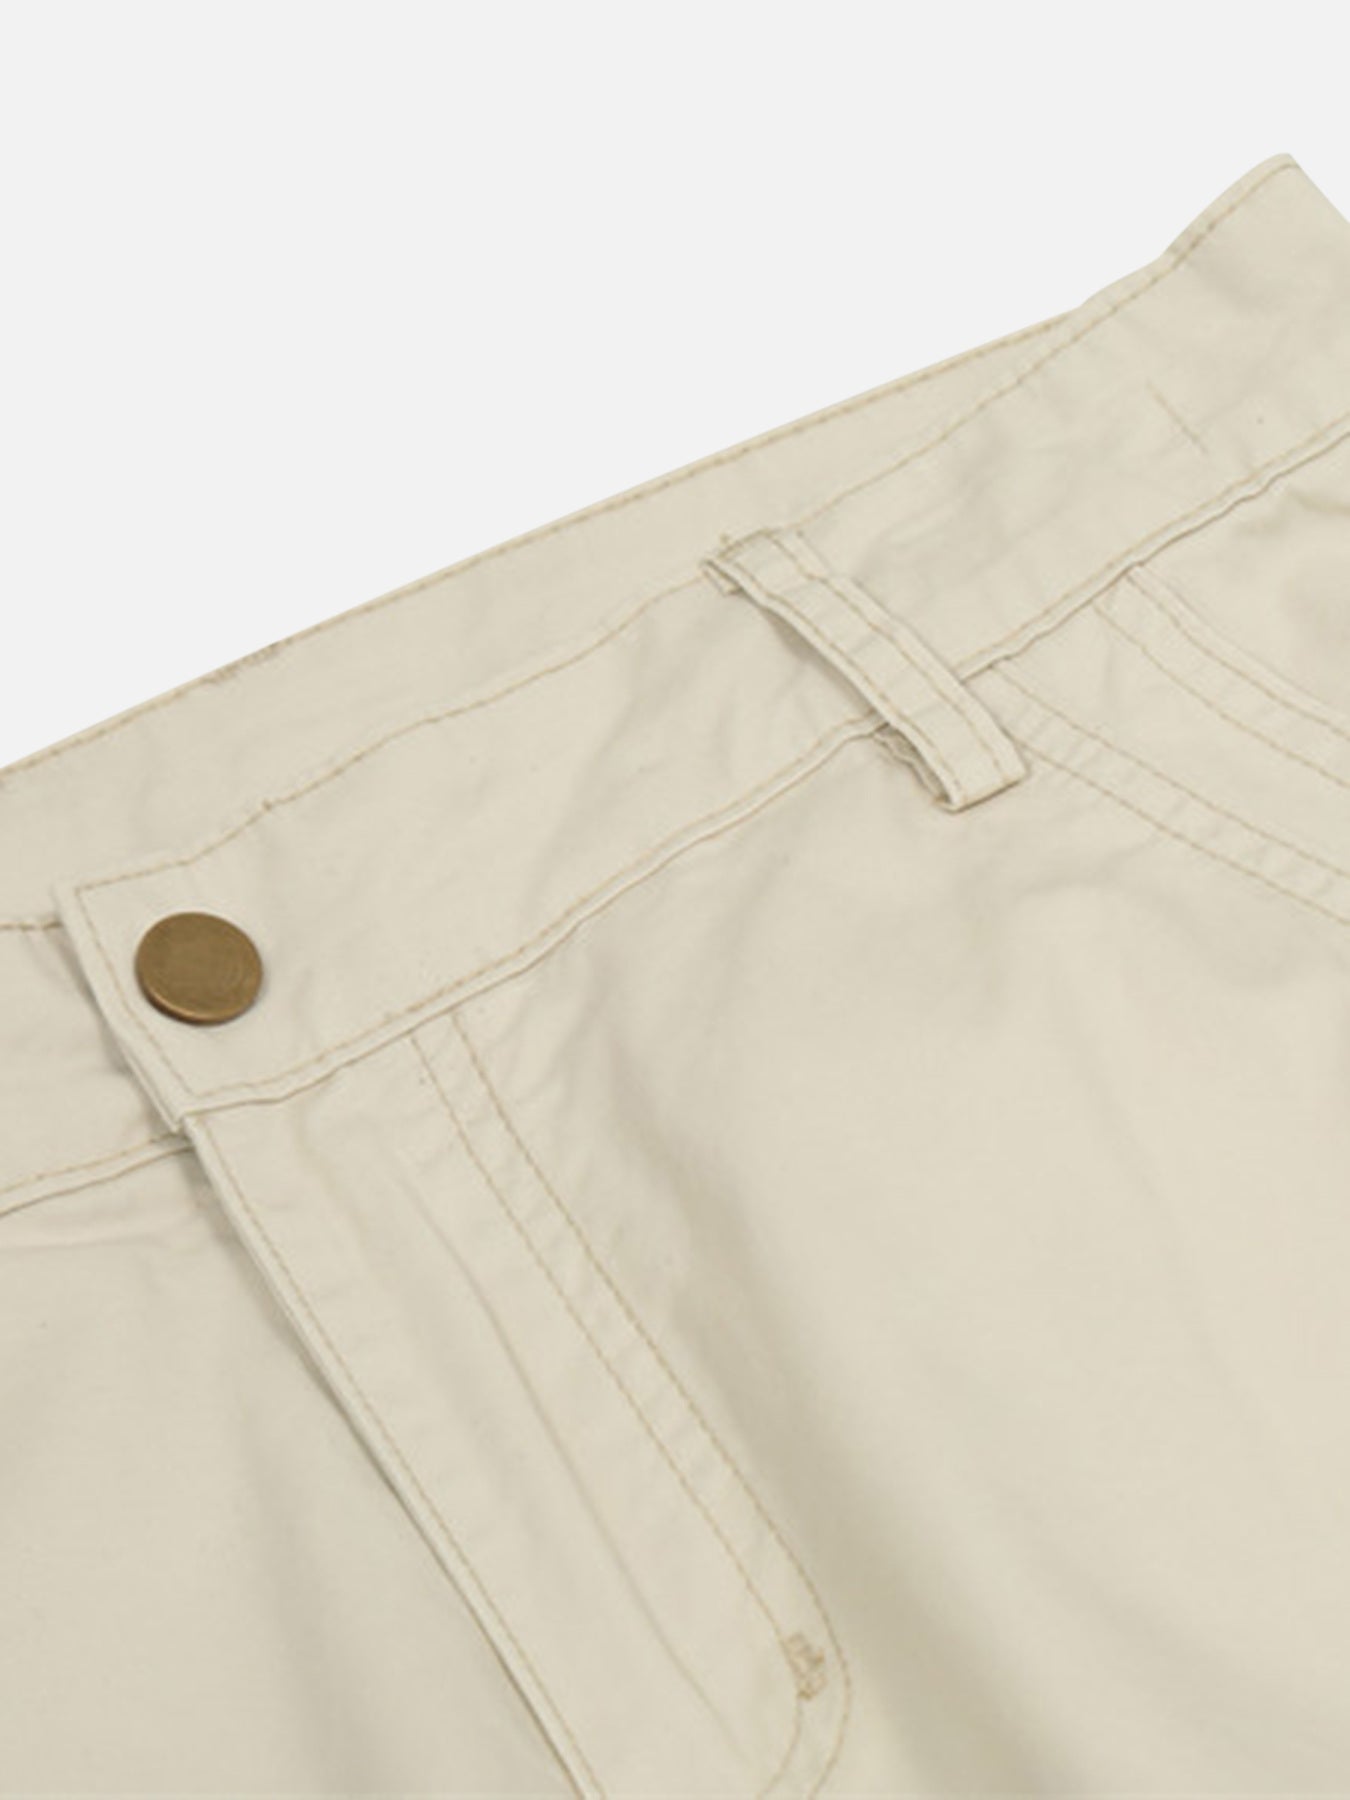 Thesupermade Multi-pocket Work Pants